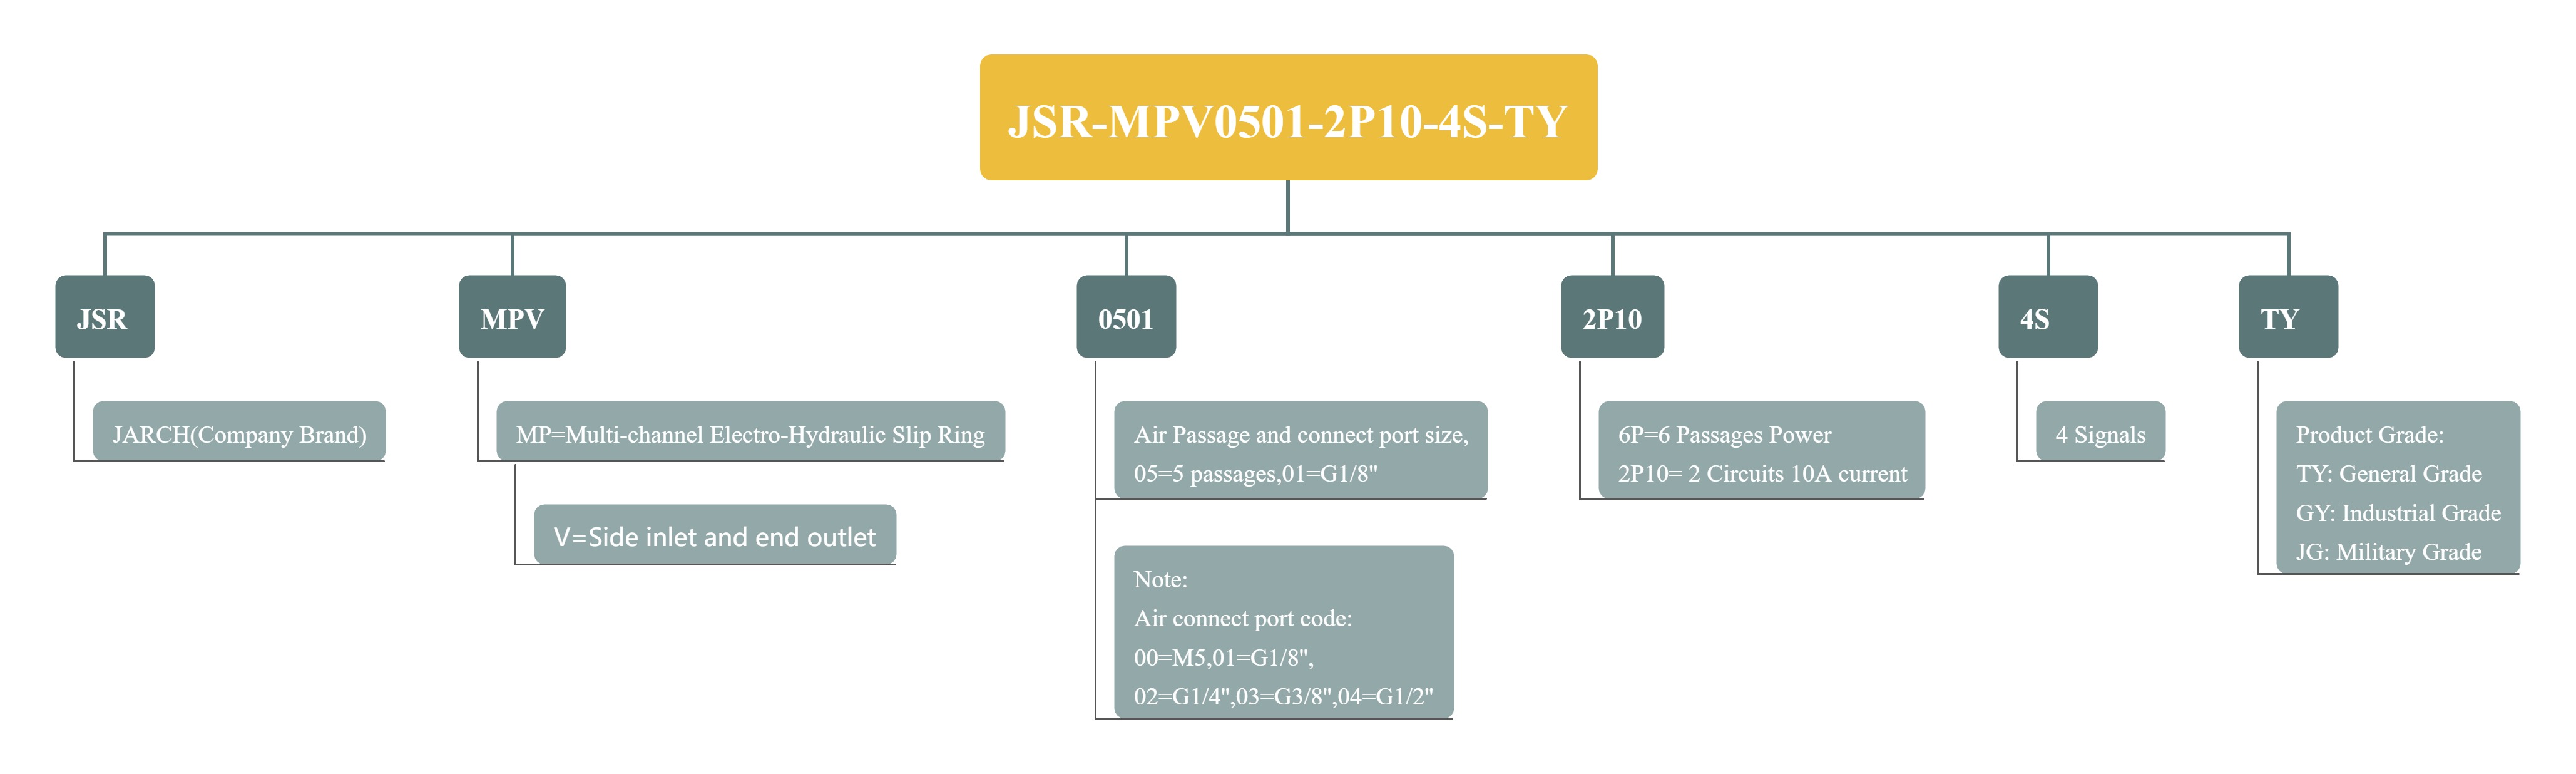 JSR-MPV0501-2P10-4S-TY.jpg